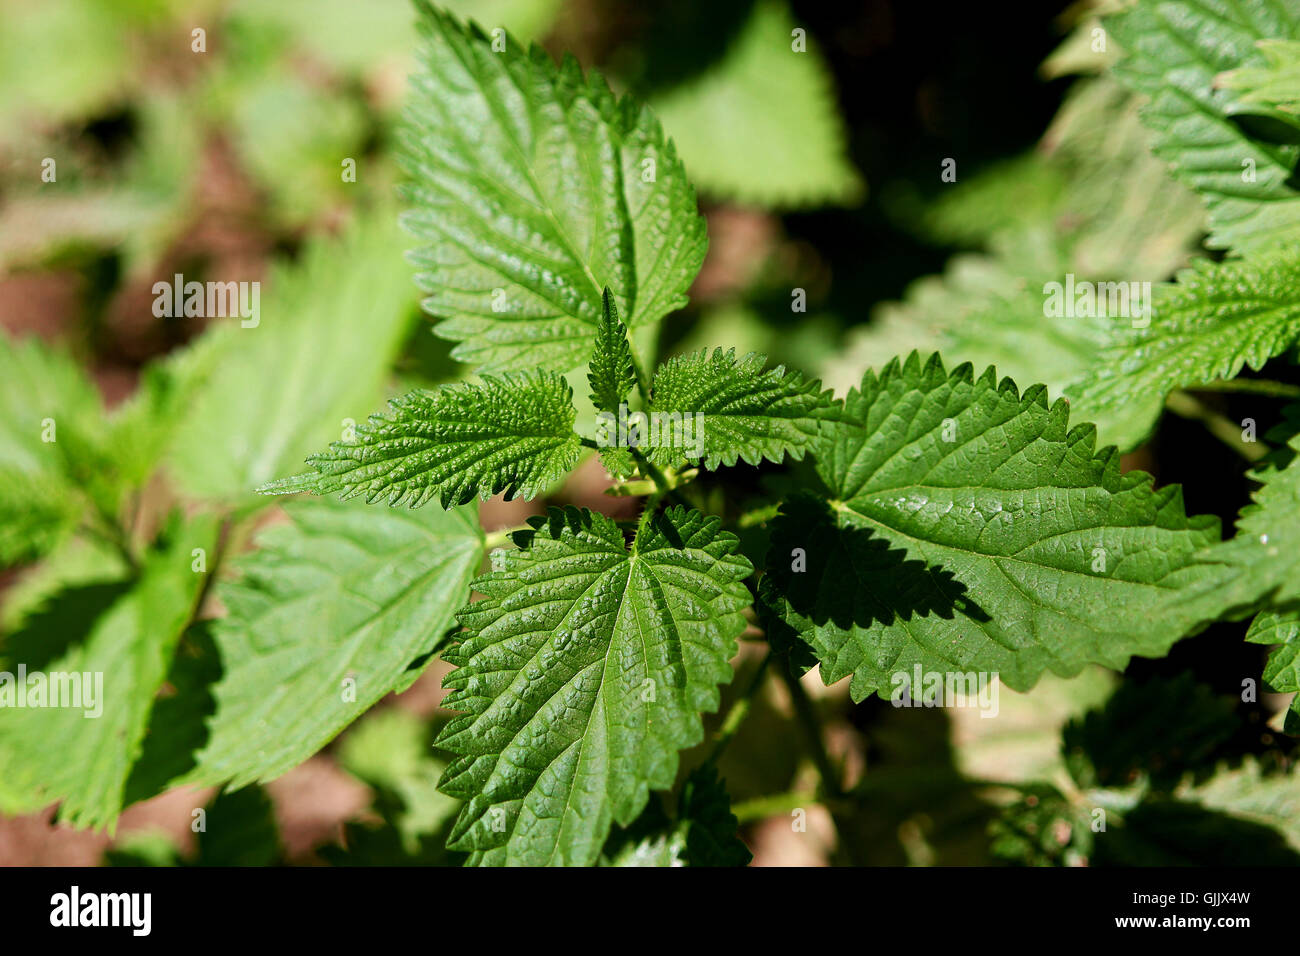 Planta medicinal ortiga fotografías e imágenes de alta resolución - Alamy